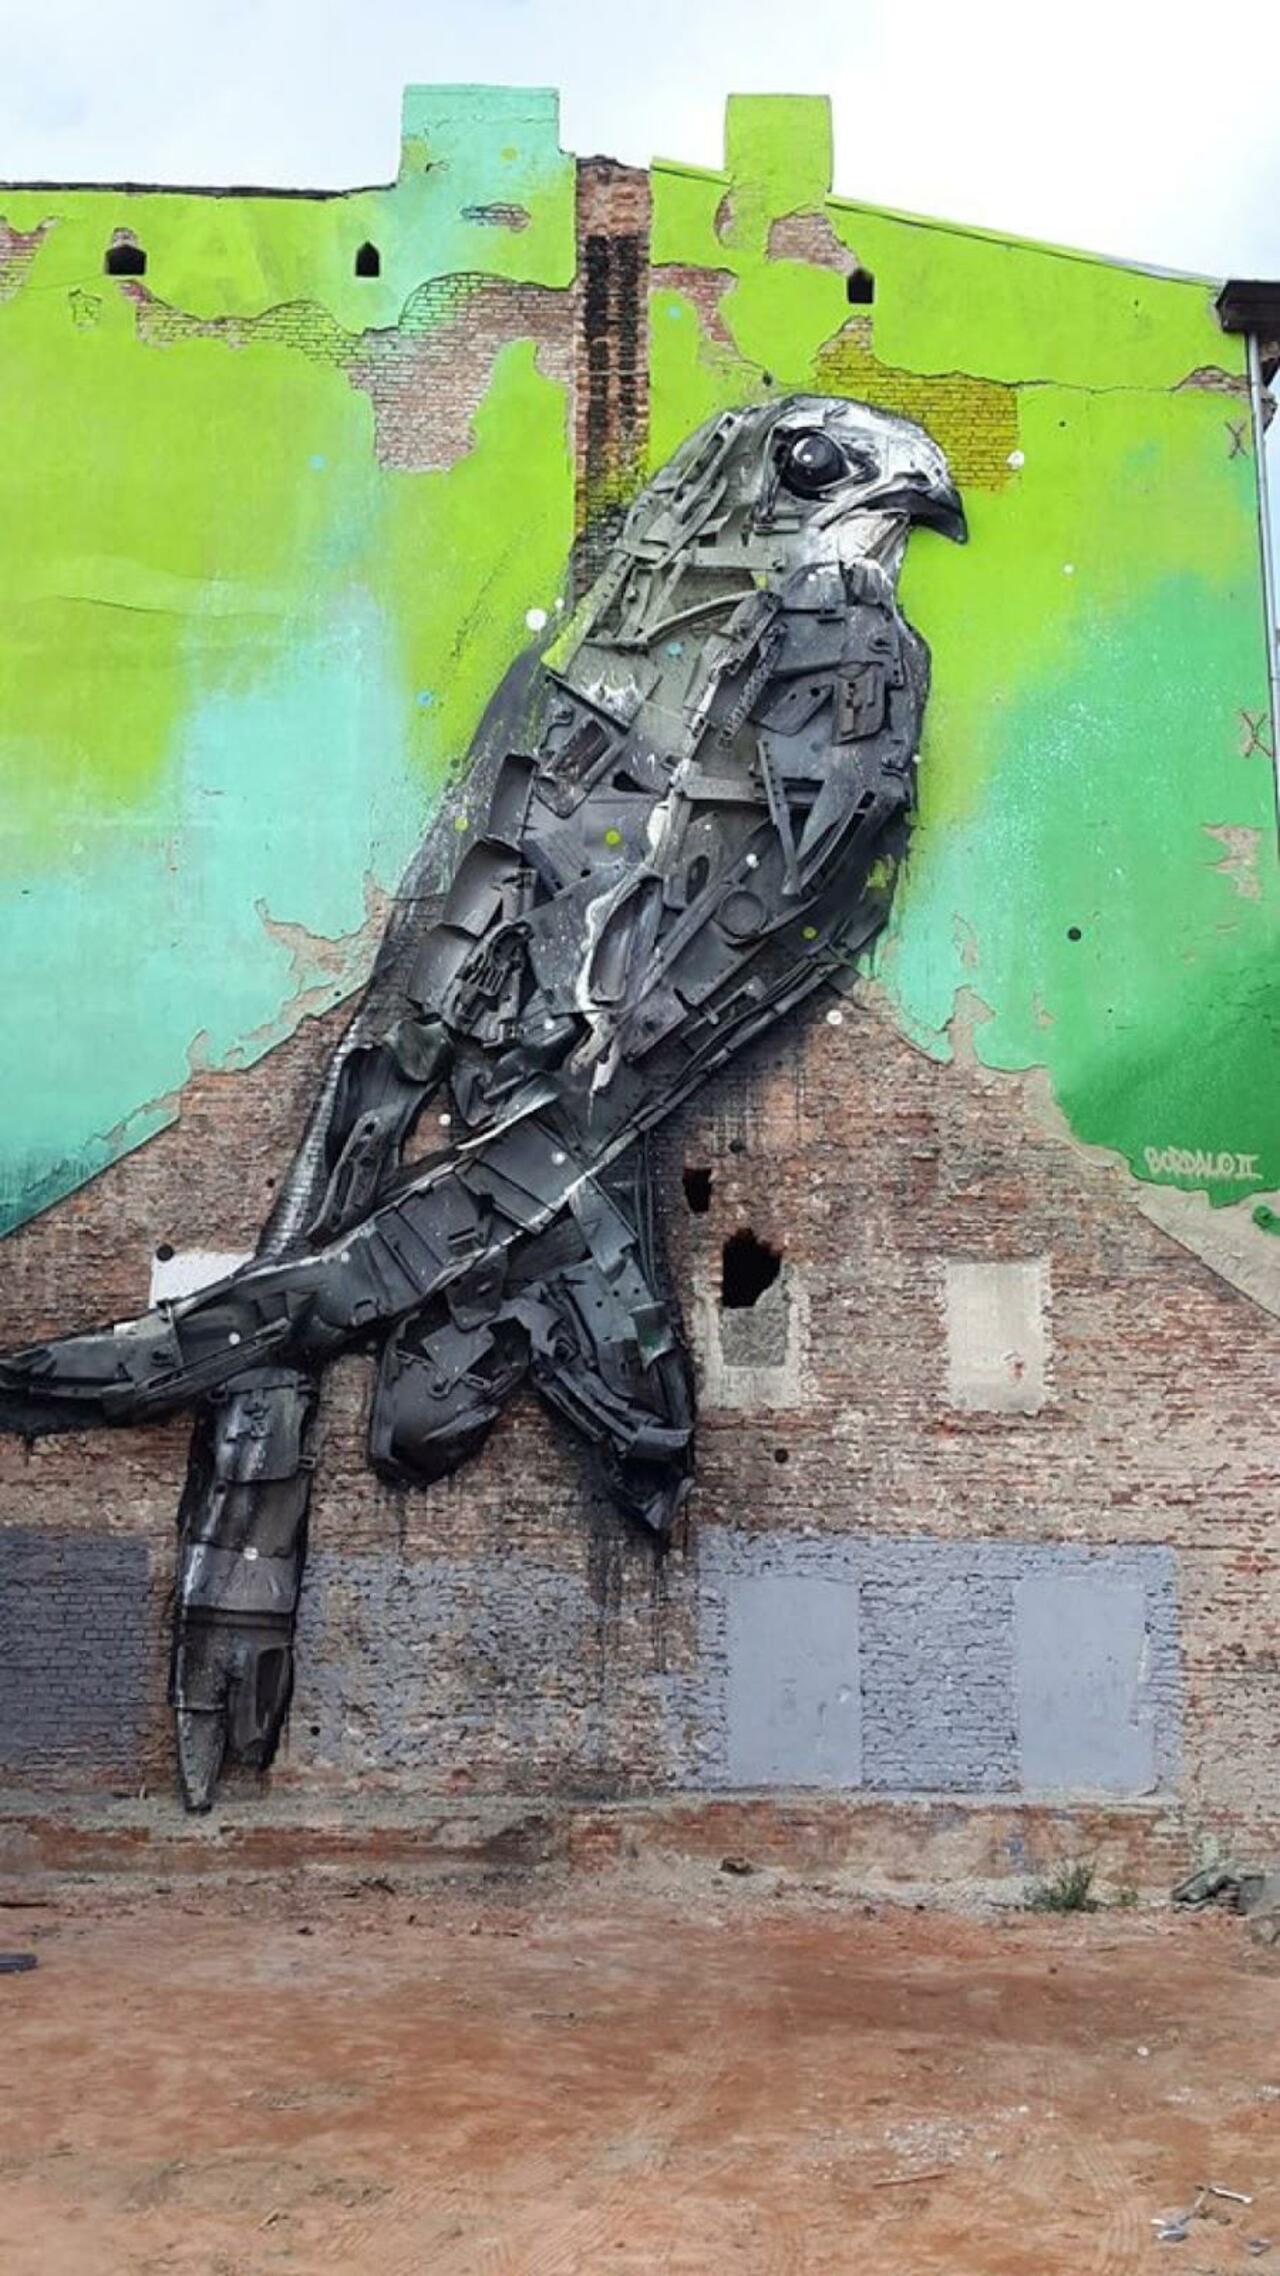 Bordalo II creates a new street art installation in Lodz, Poland. #StreetArt #Graffiti #Mural http://t.co/Rr0rCCphy0